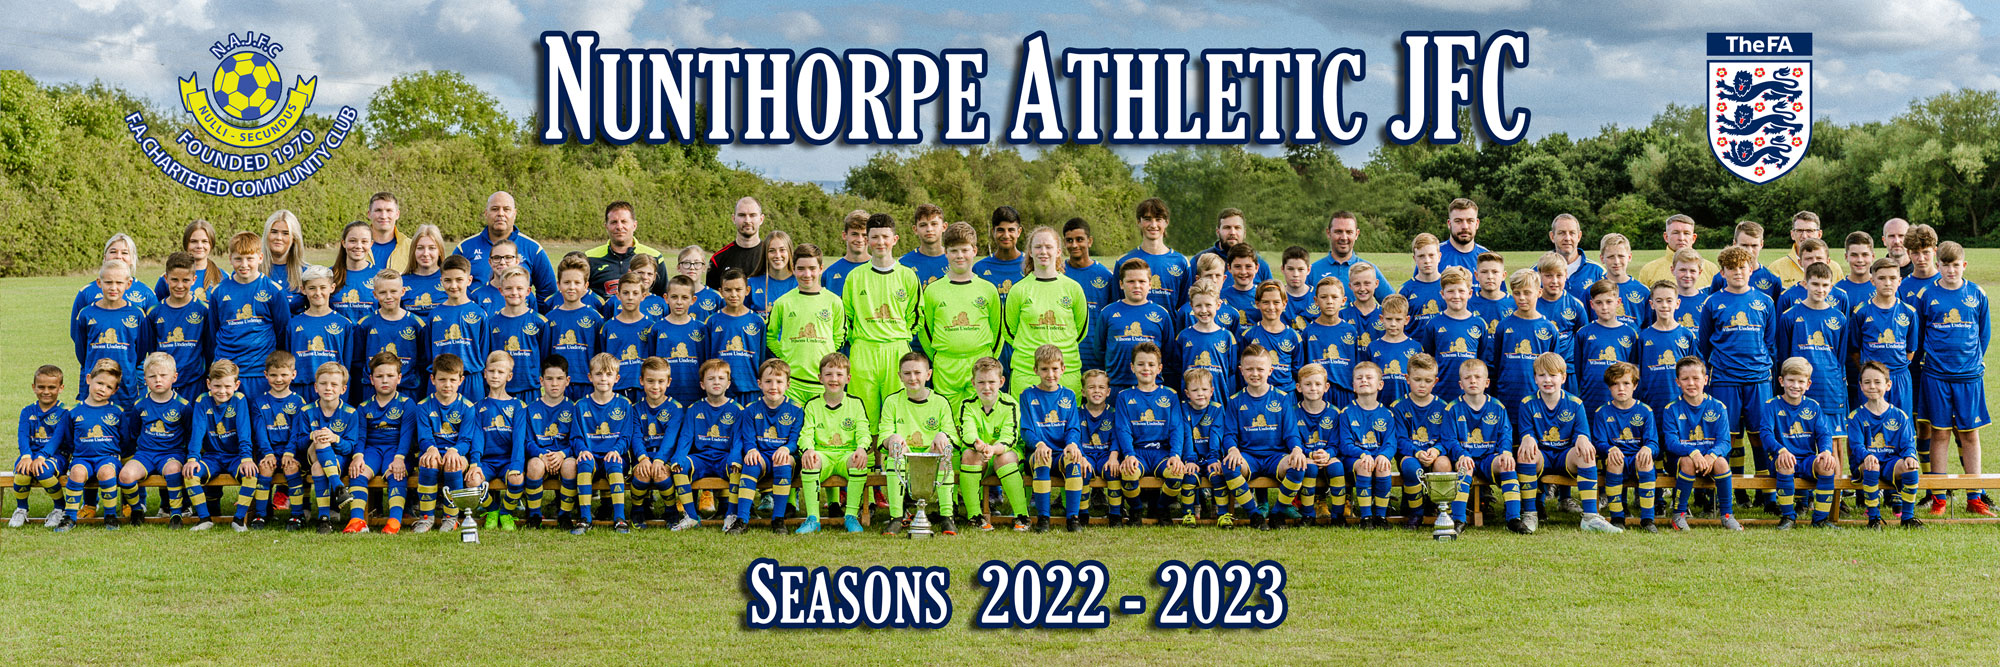 Nunthorpe Athletic JFC CLub Photo 2022-23